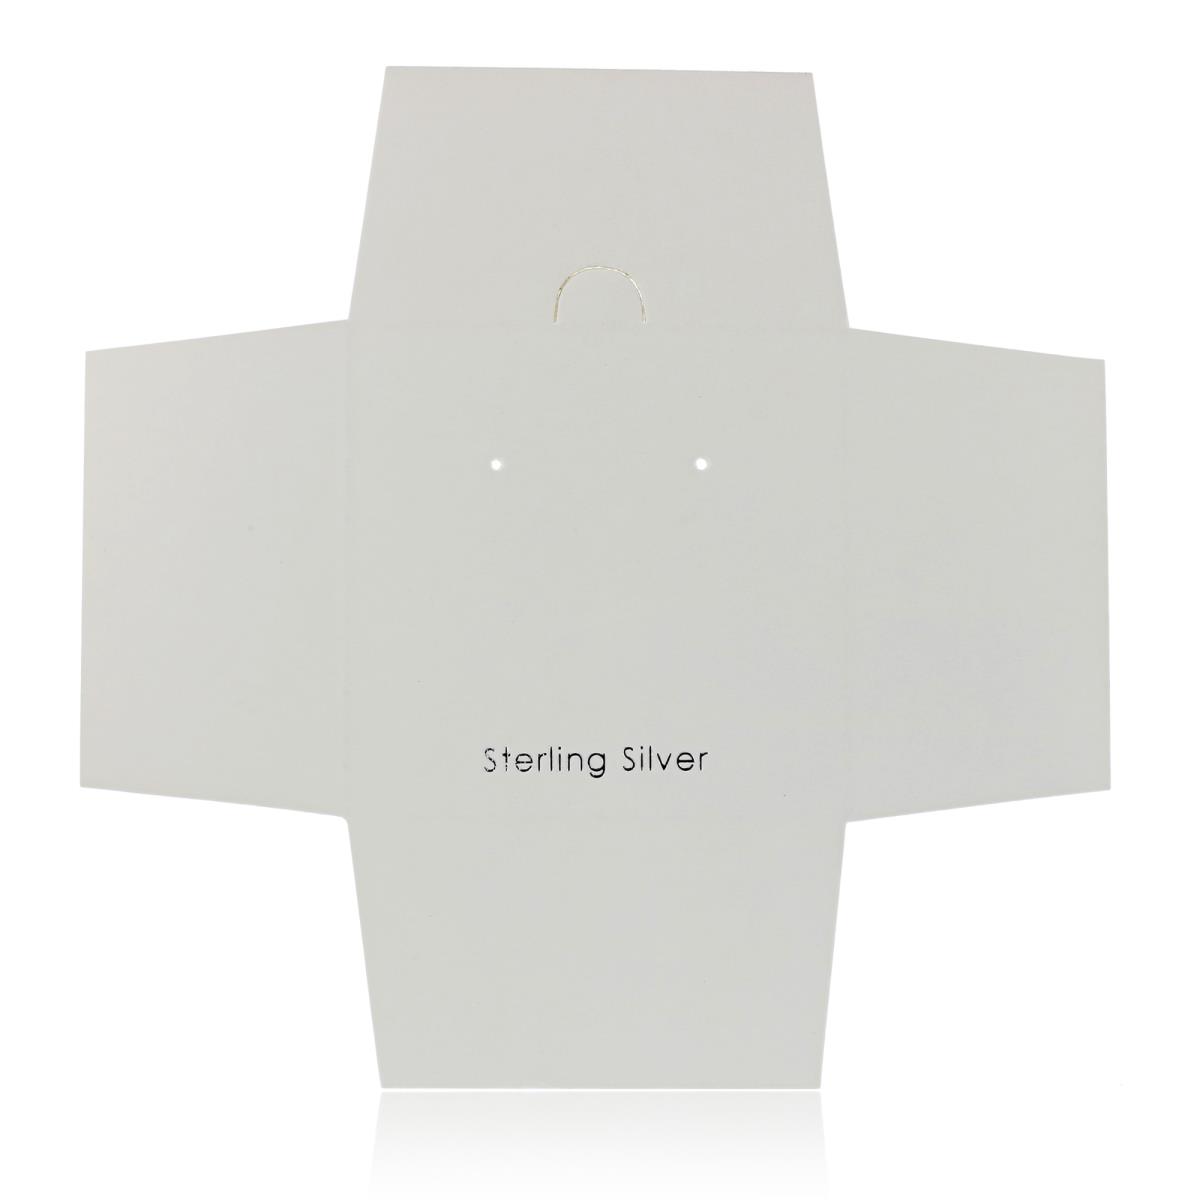 Sterling Silver 64x64x43mm Art Paper 1 Pair of Studs Box Insert